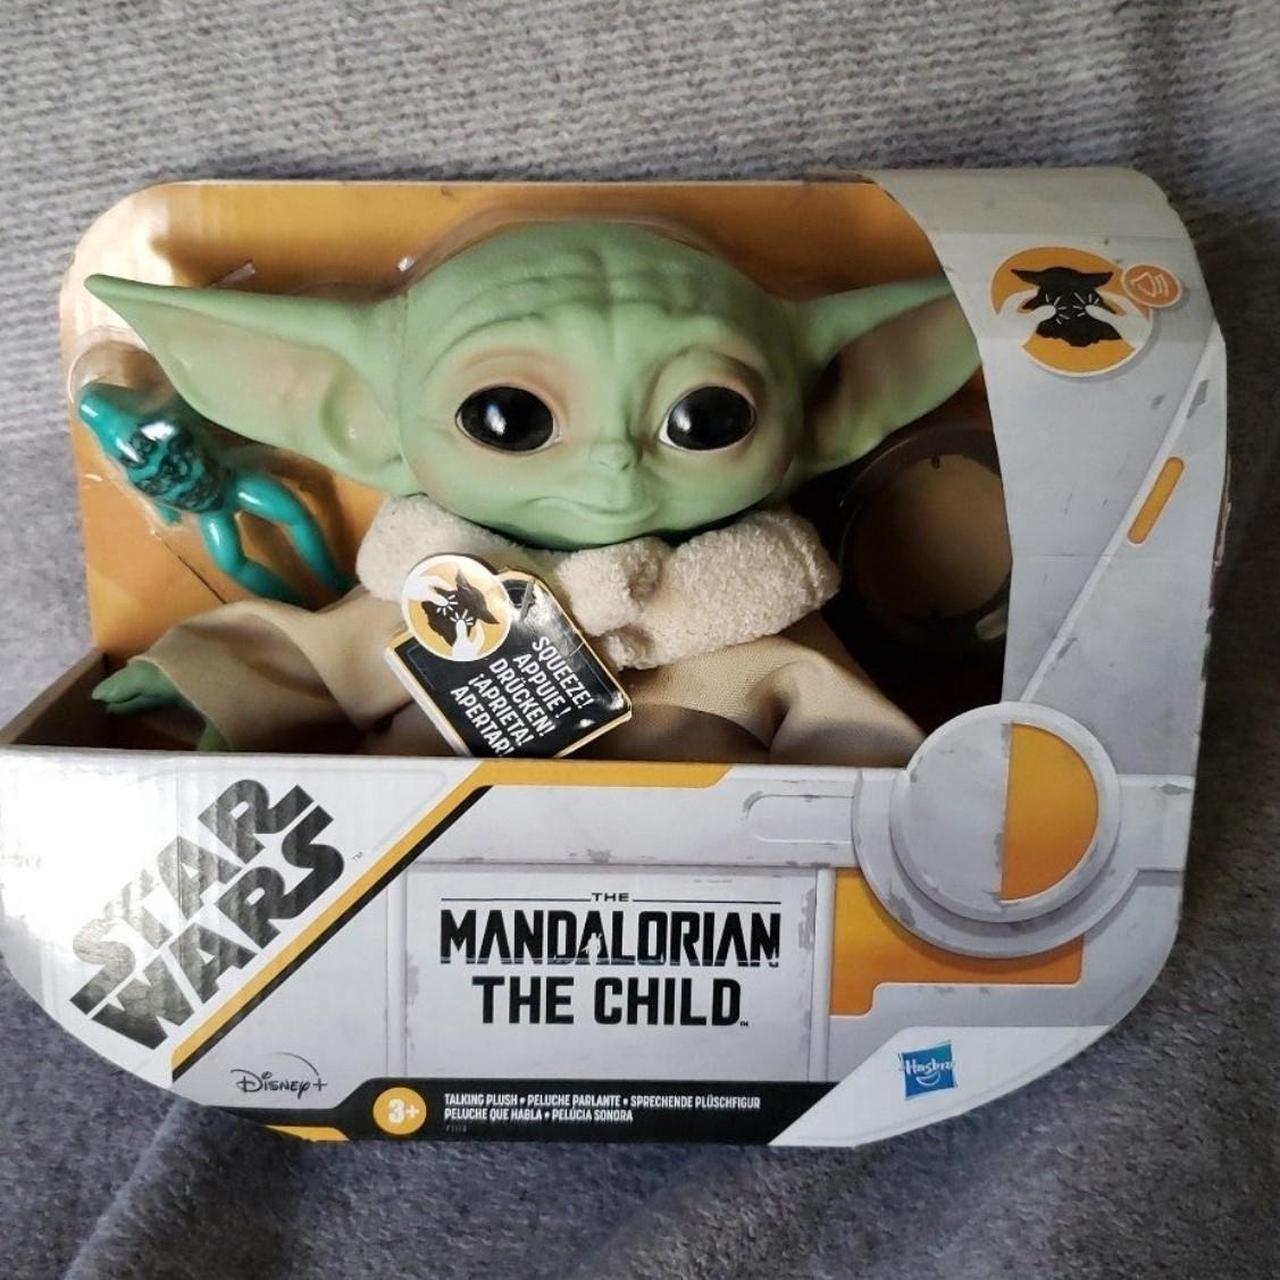 Star Wars The Mandalorian, The Child Talking Plush Toy